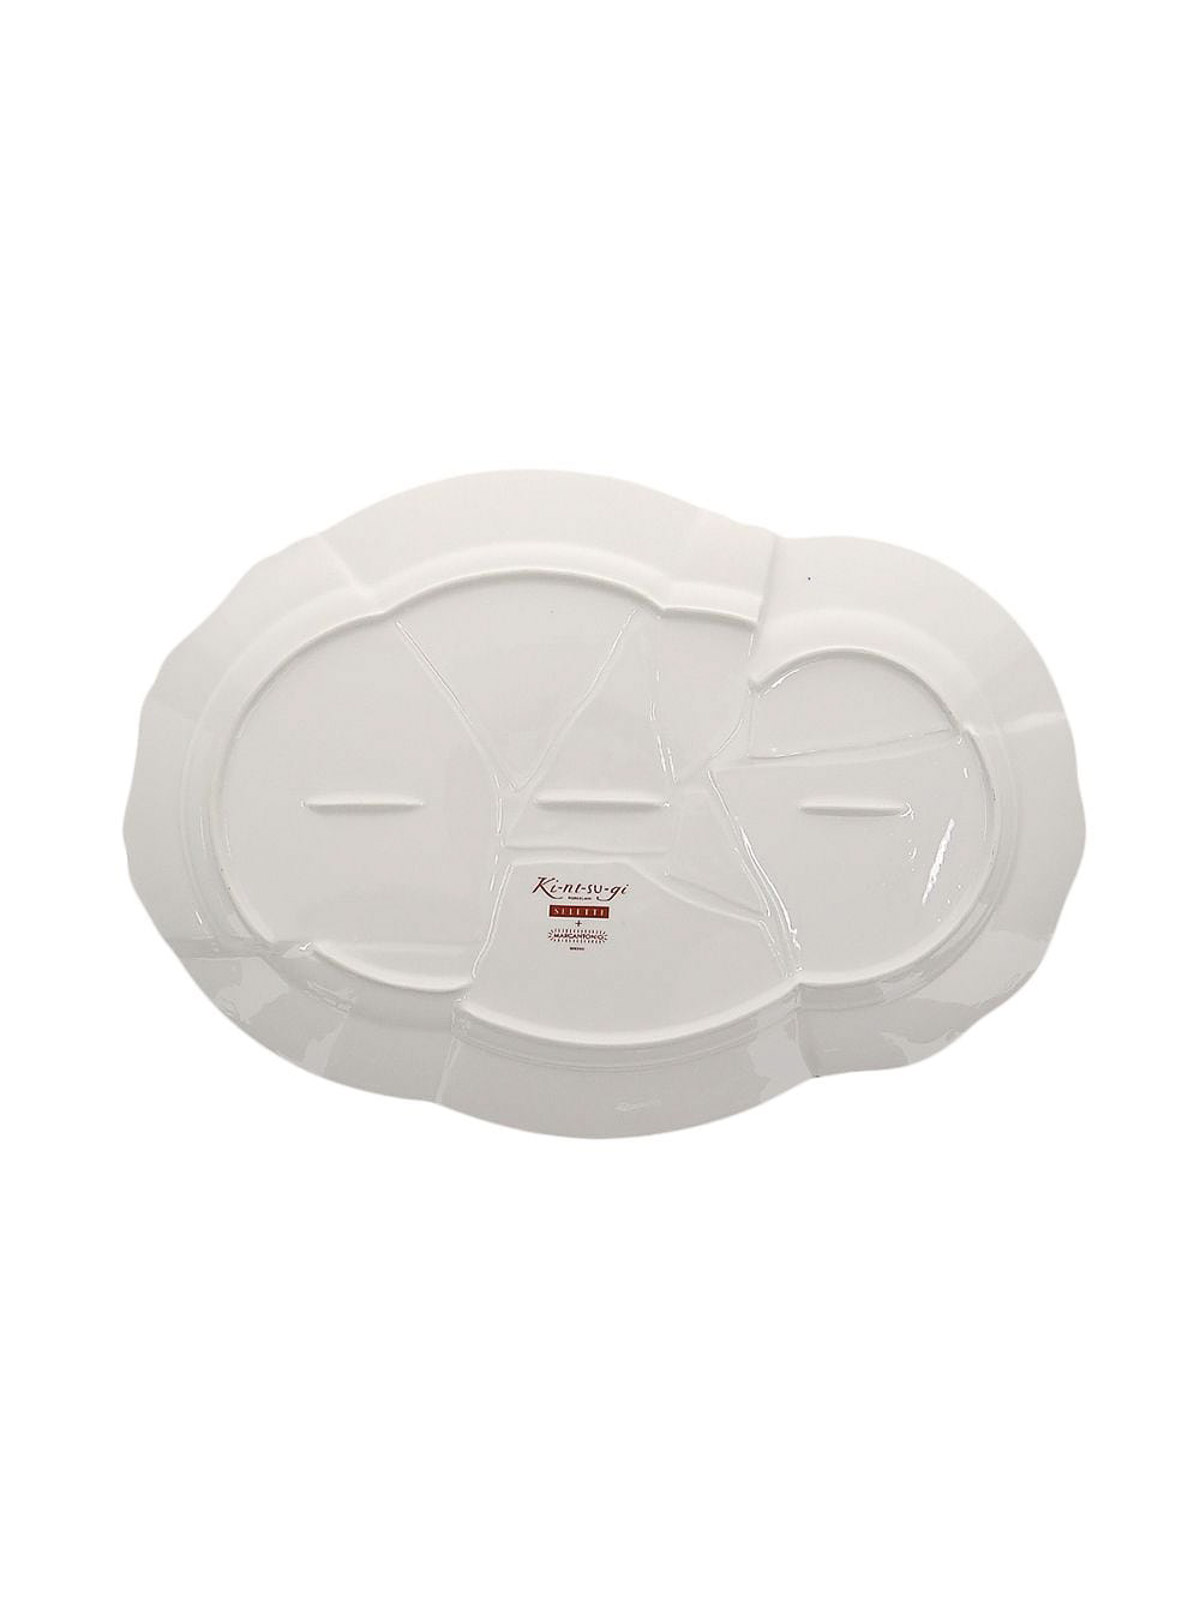 Homeware Seletti - Porcelain tray cm 42,5x29,5 x3,5 kintsugi -  09655ERROR2NEUTRO